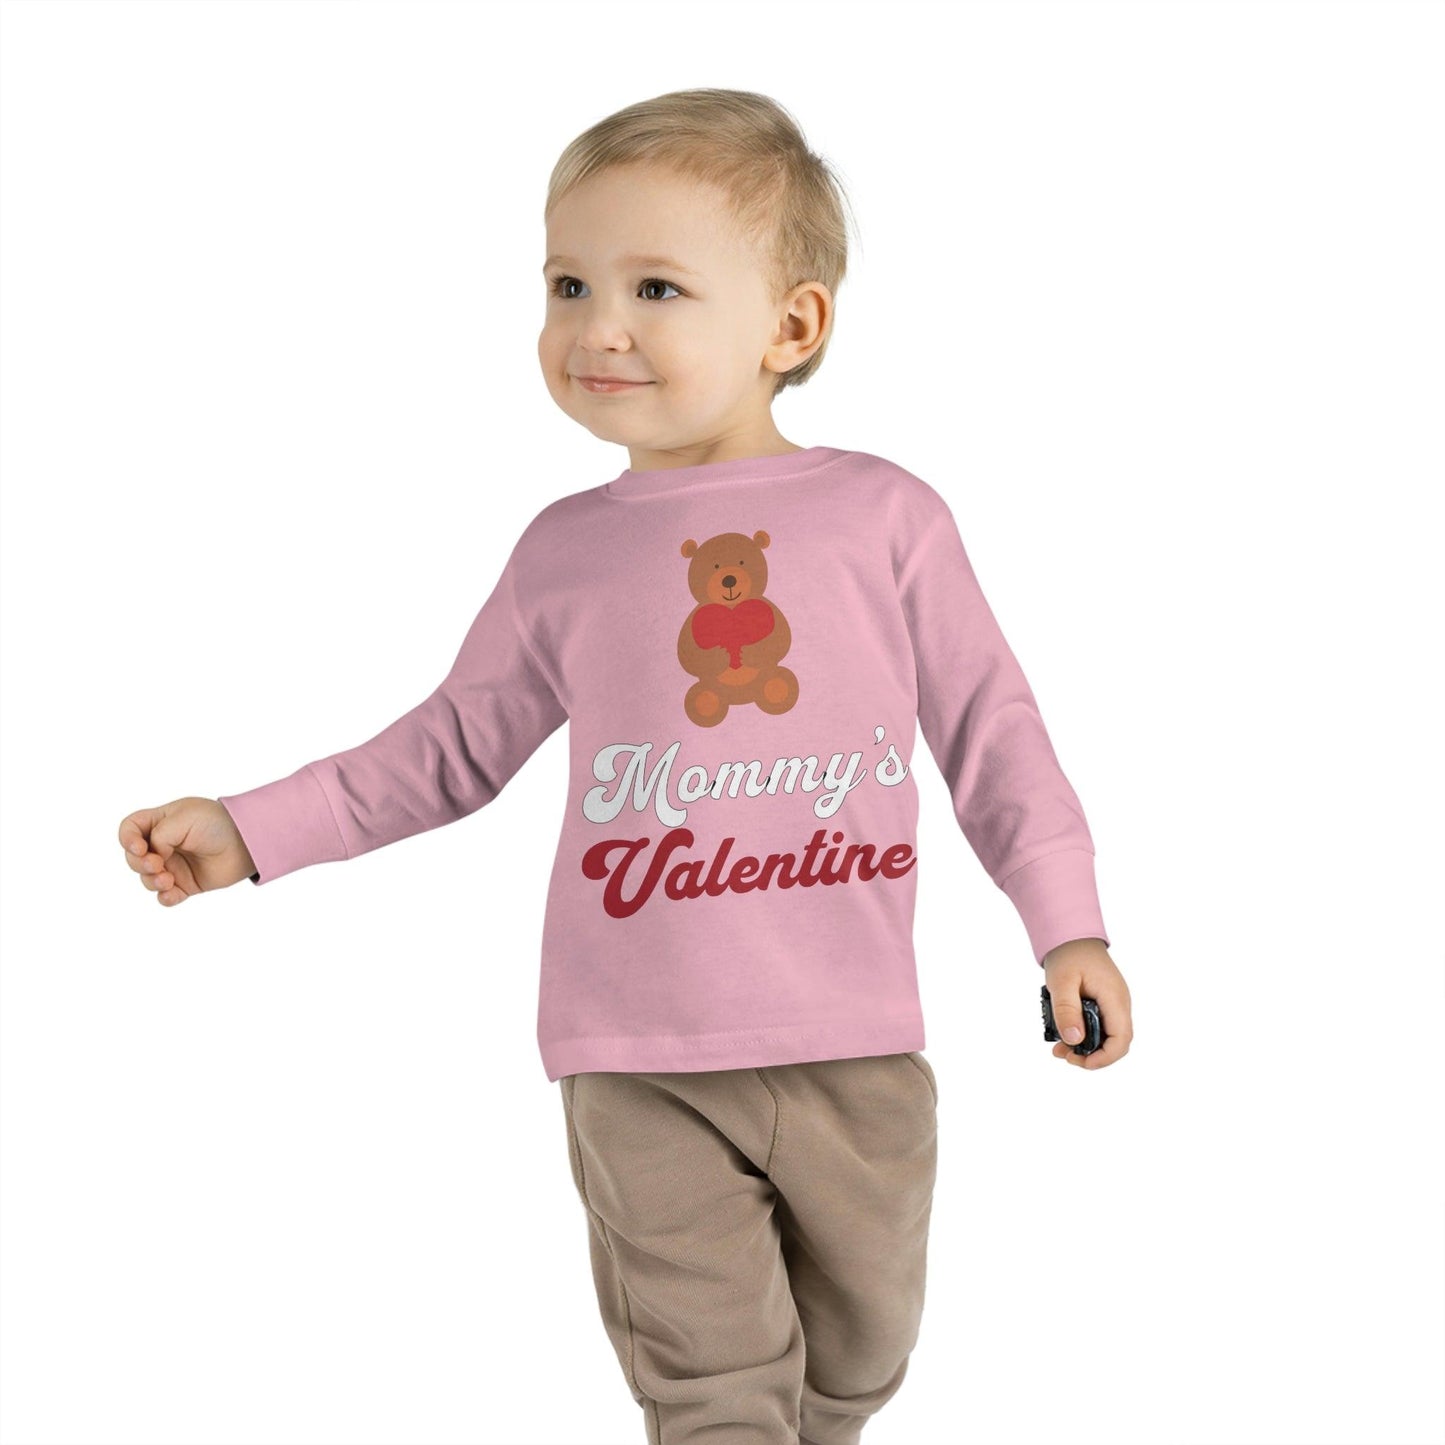 Mommy's Valentine - Kids Valentine day shirt